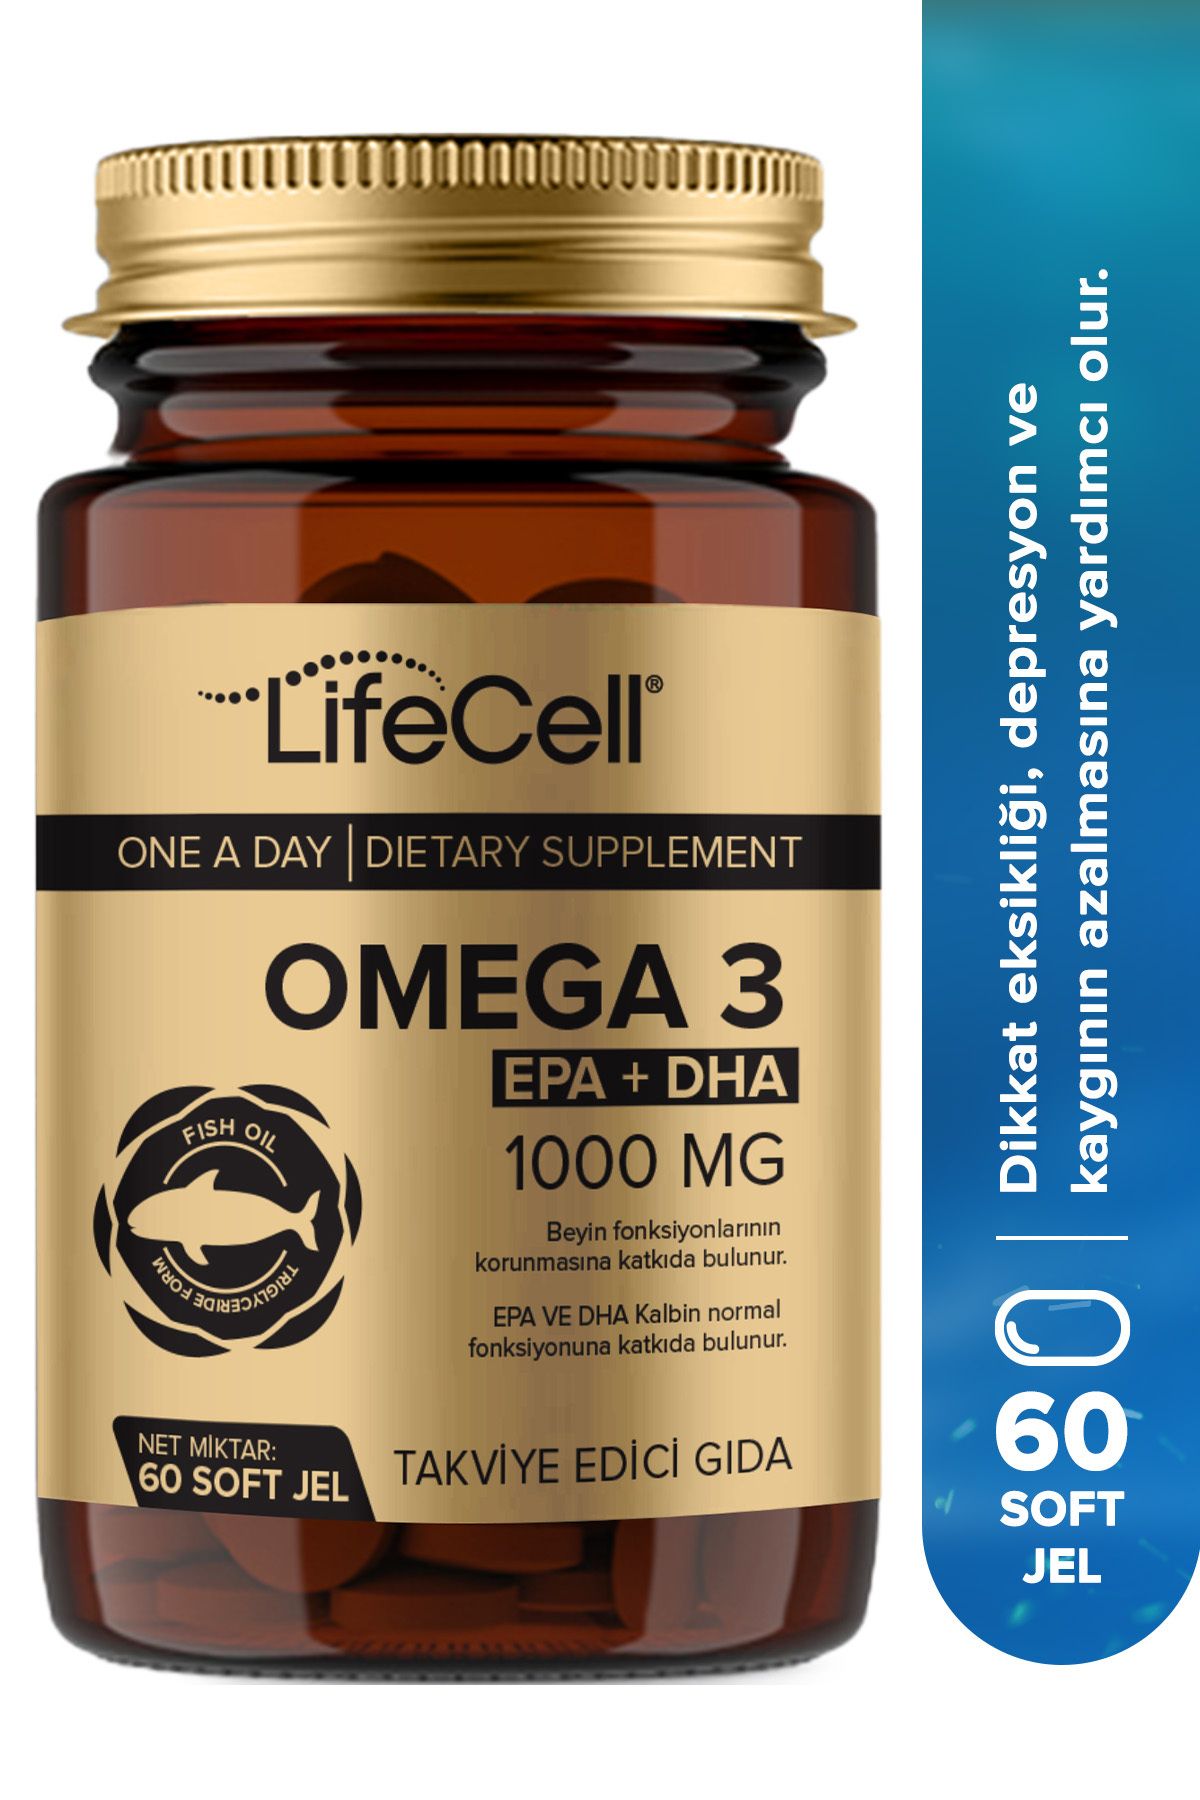 Lifecell Omega3 Epa Dha 1000mg - 60 Adet Soft Jel Balık Yağı Desteği